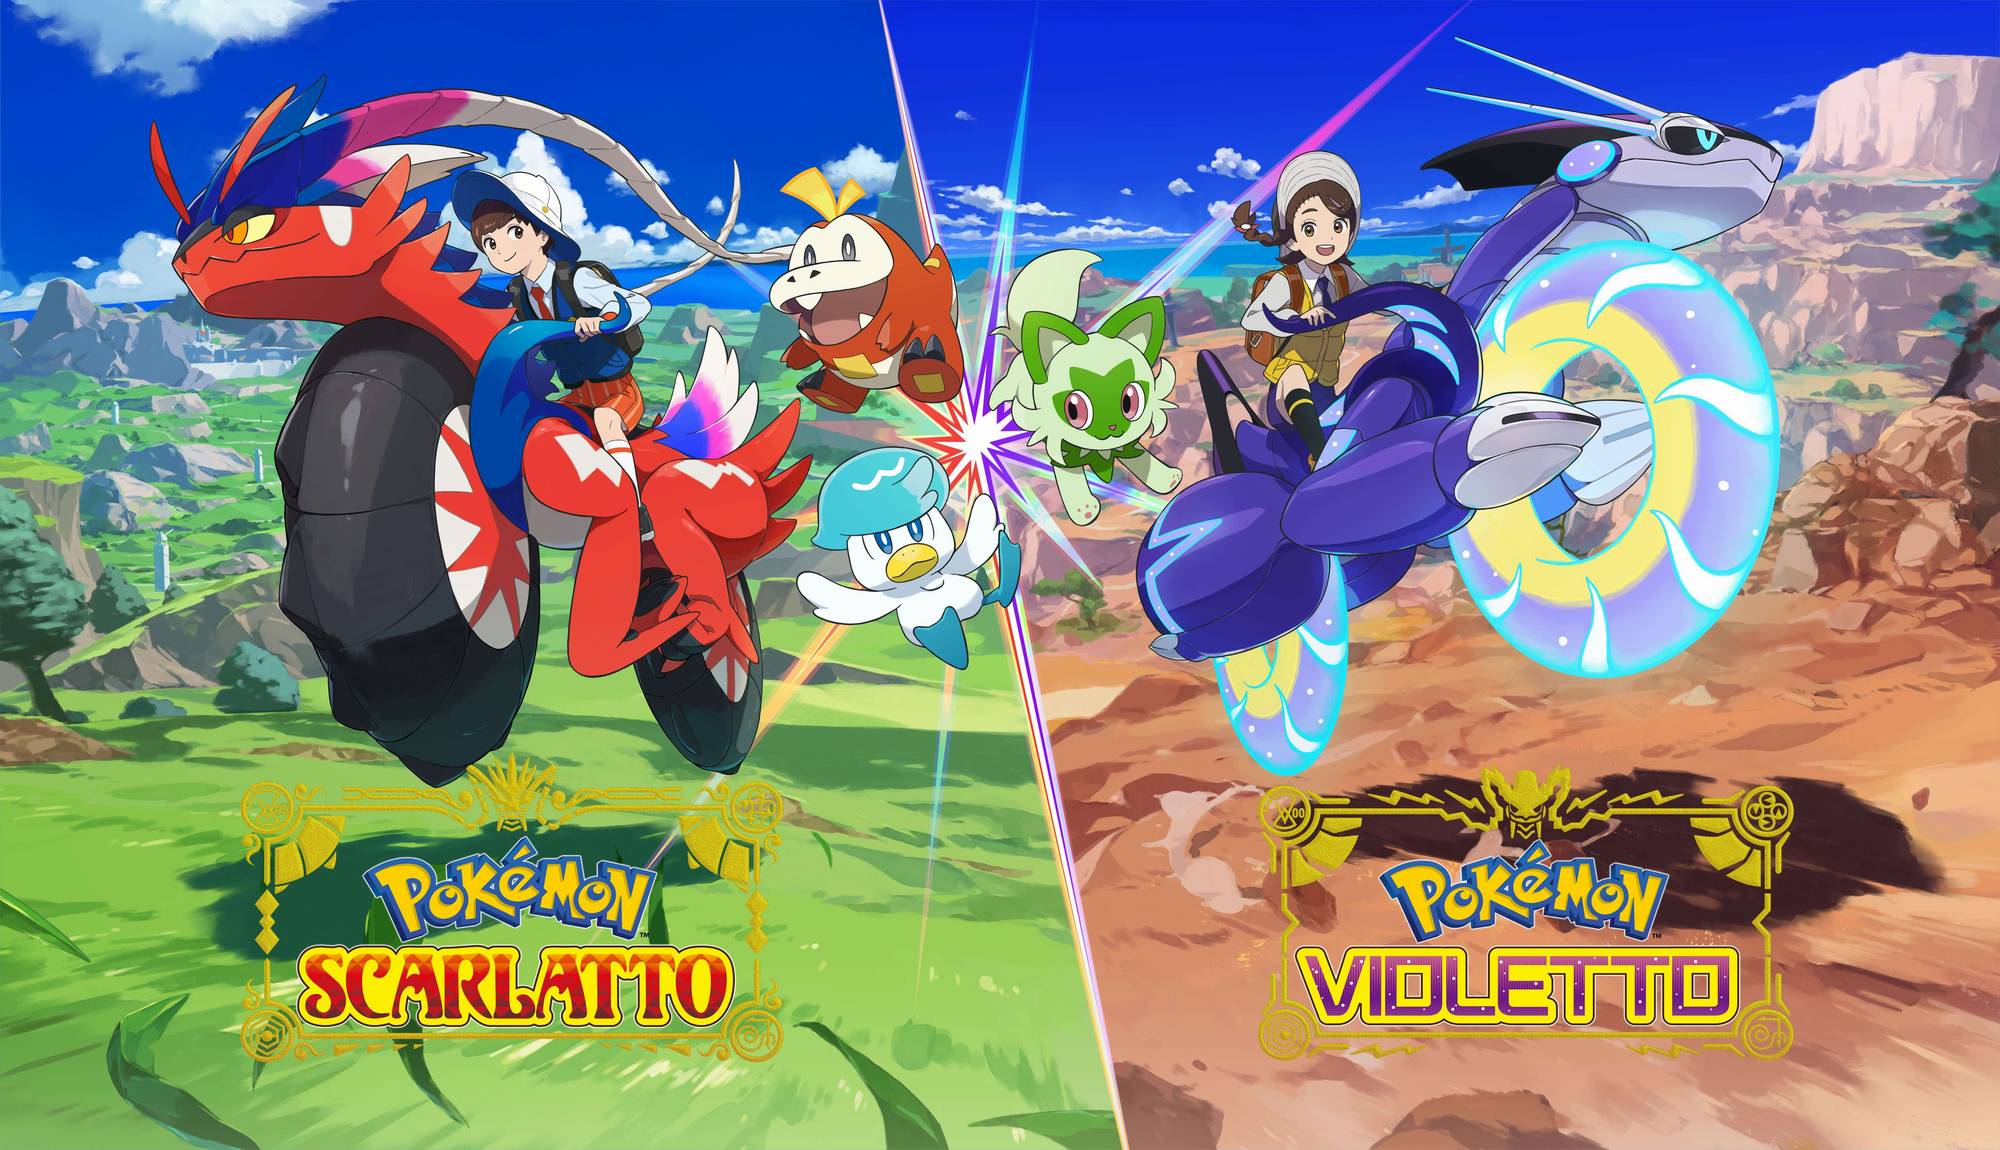 Rivelati nuovi dettagli su Pokémon Scarlatto e Pokémon Violetto